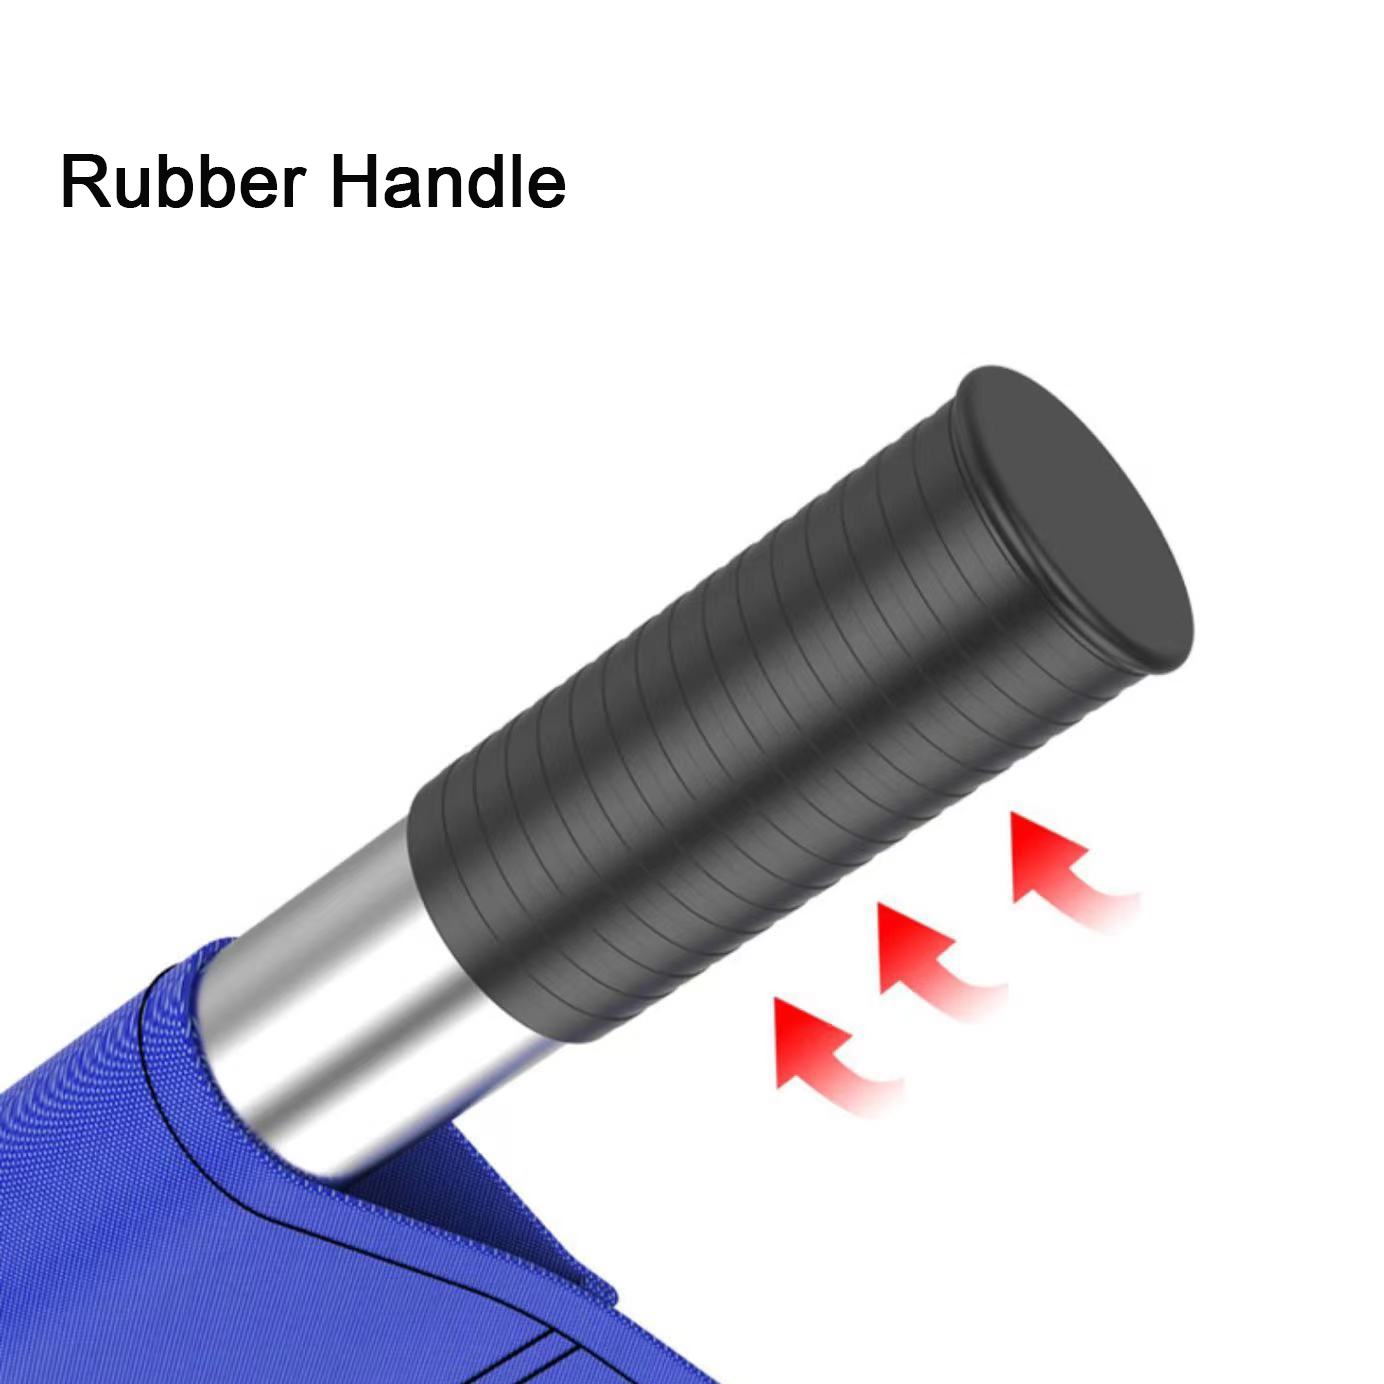 Rubber handle